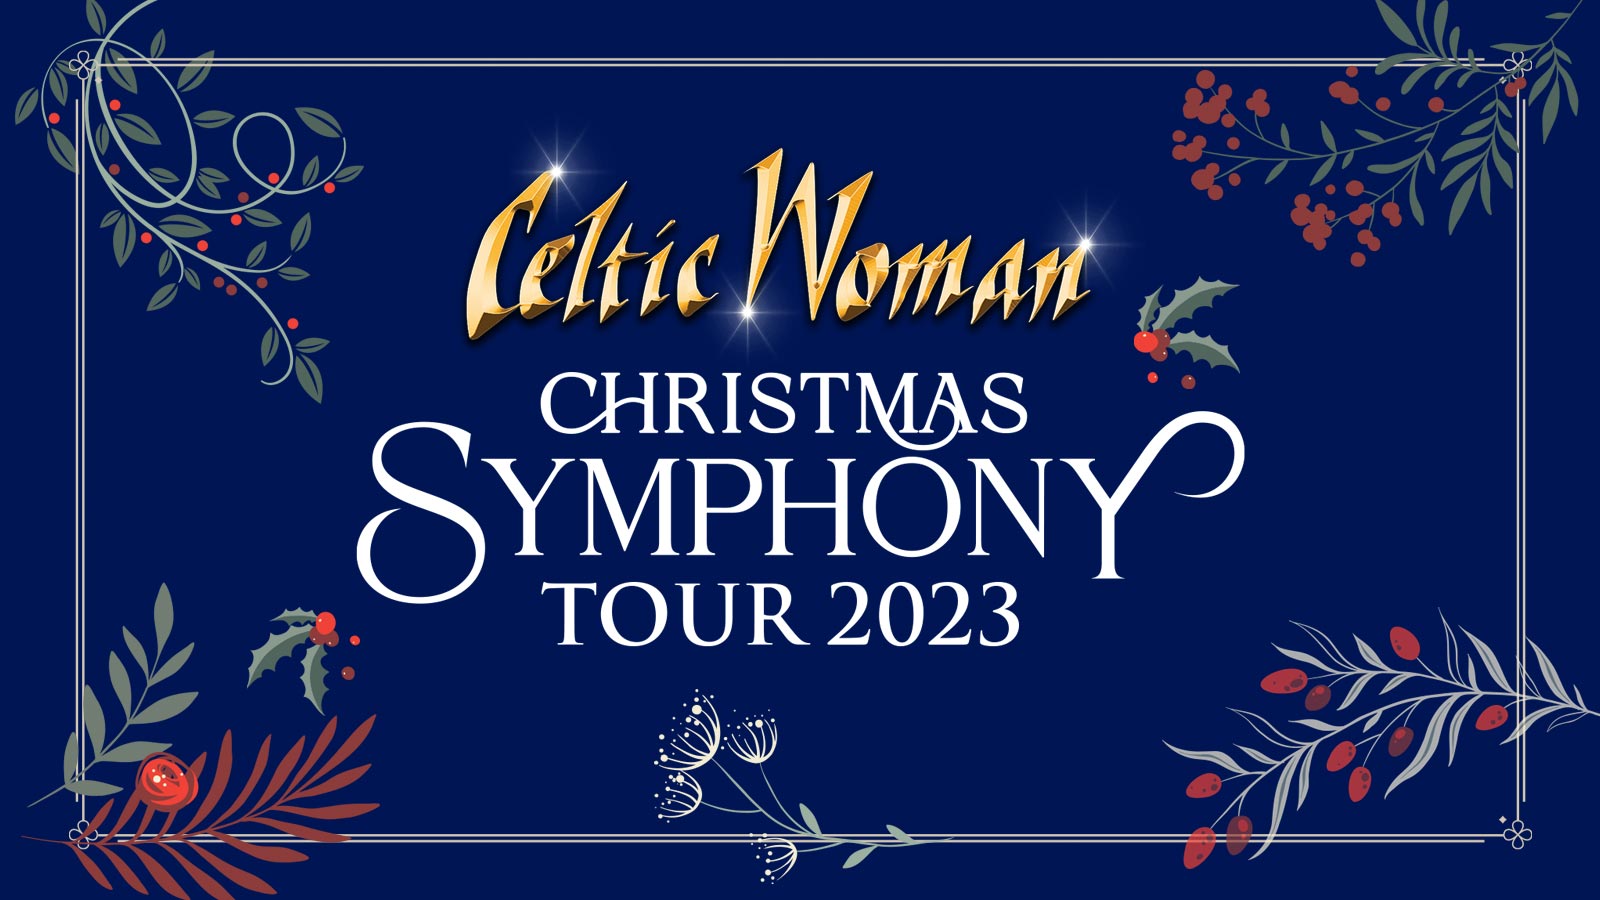 Celtic Woman Christmas Symphony Tour 2023 Kennedy Center